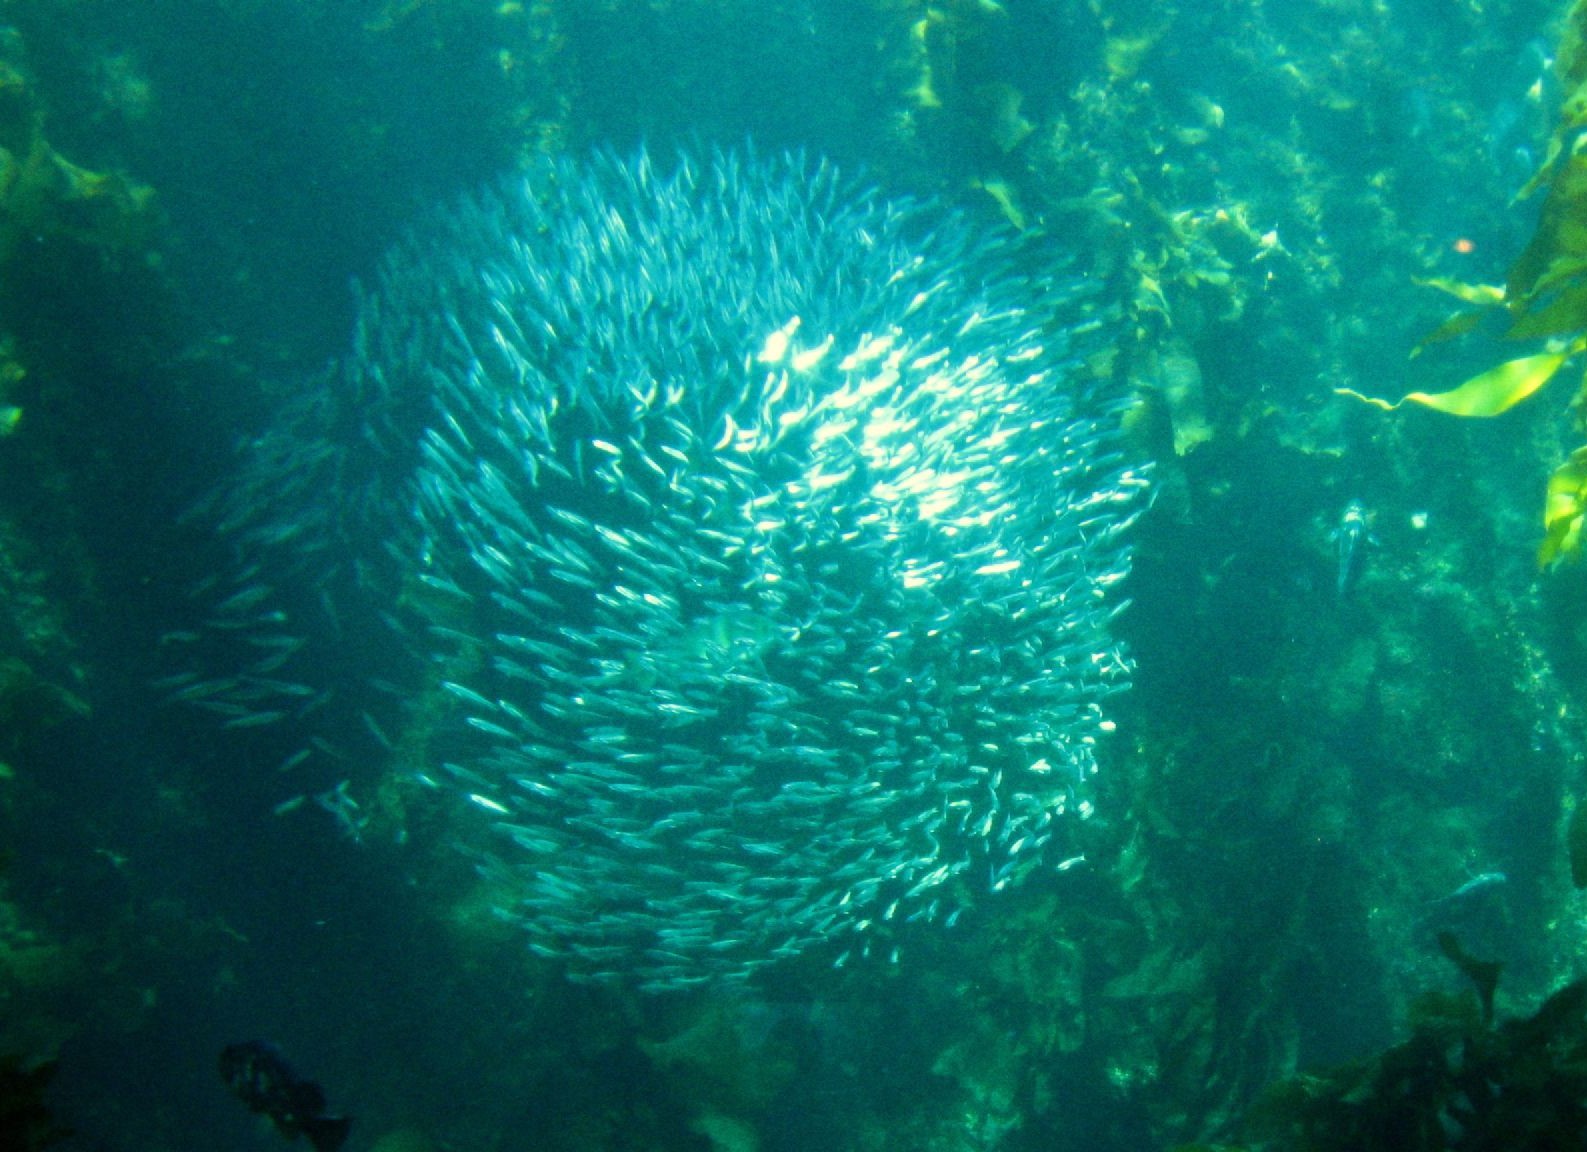 A school of small fish in the Monterey Bay Aquarium.